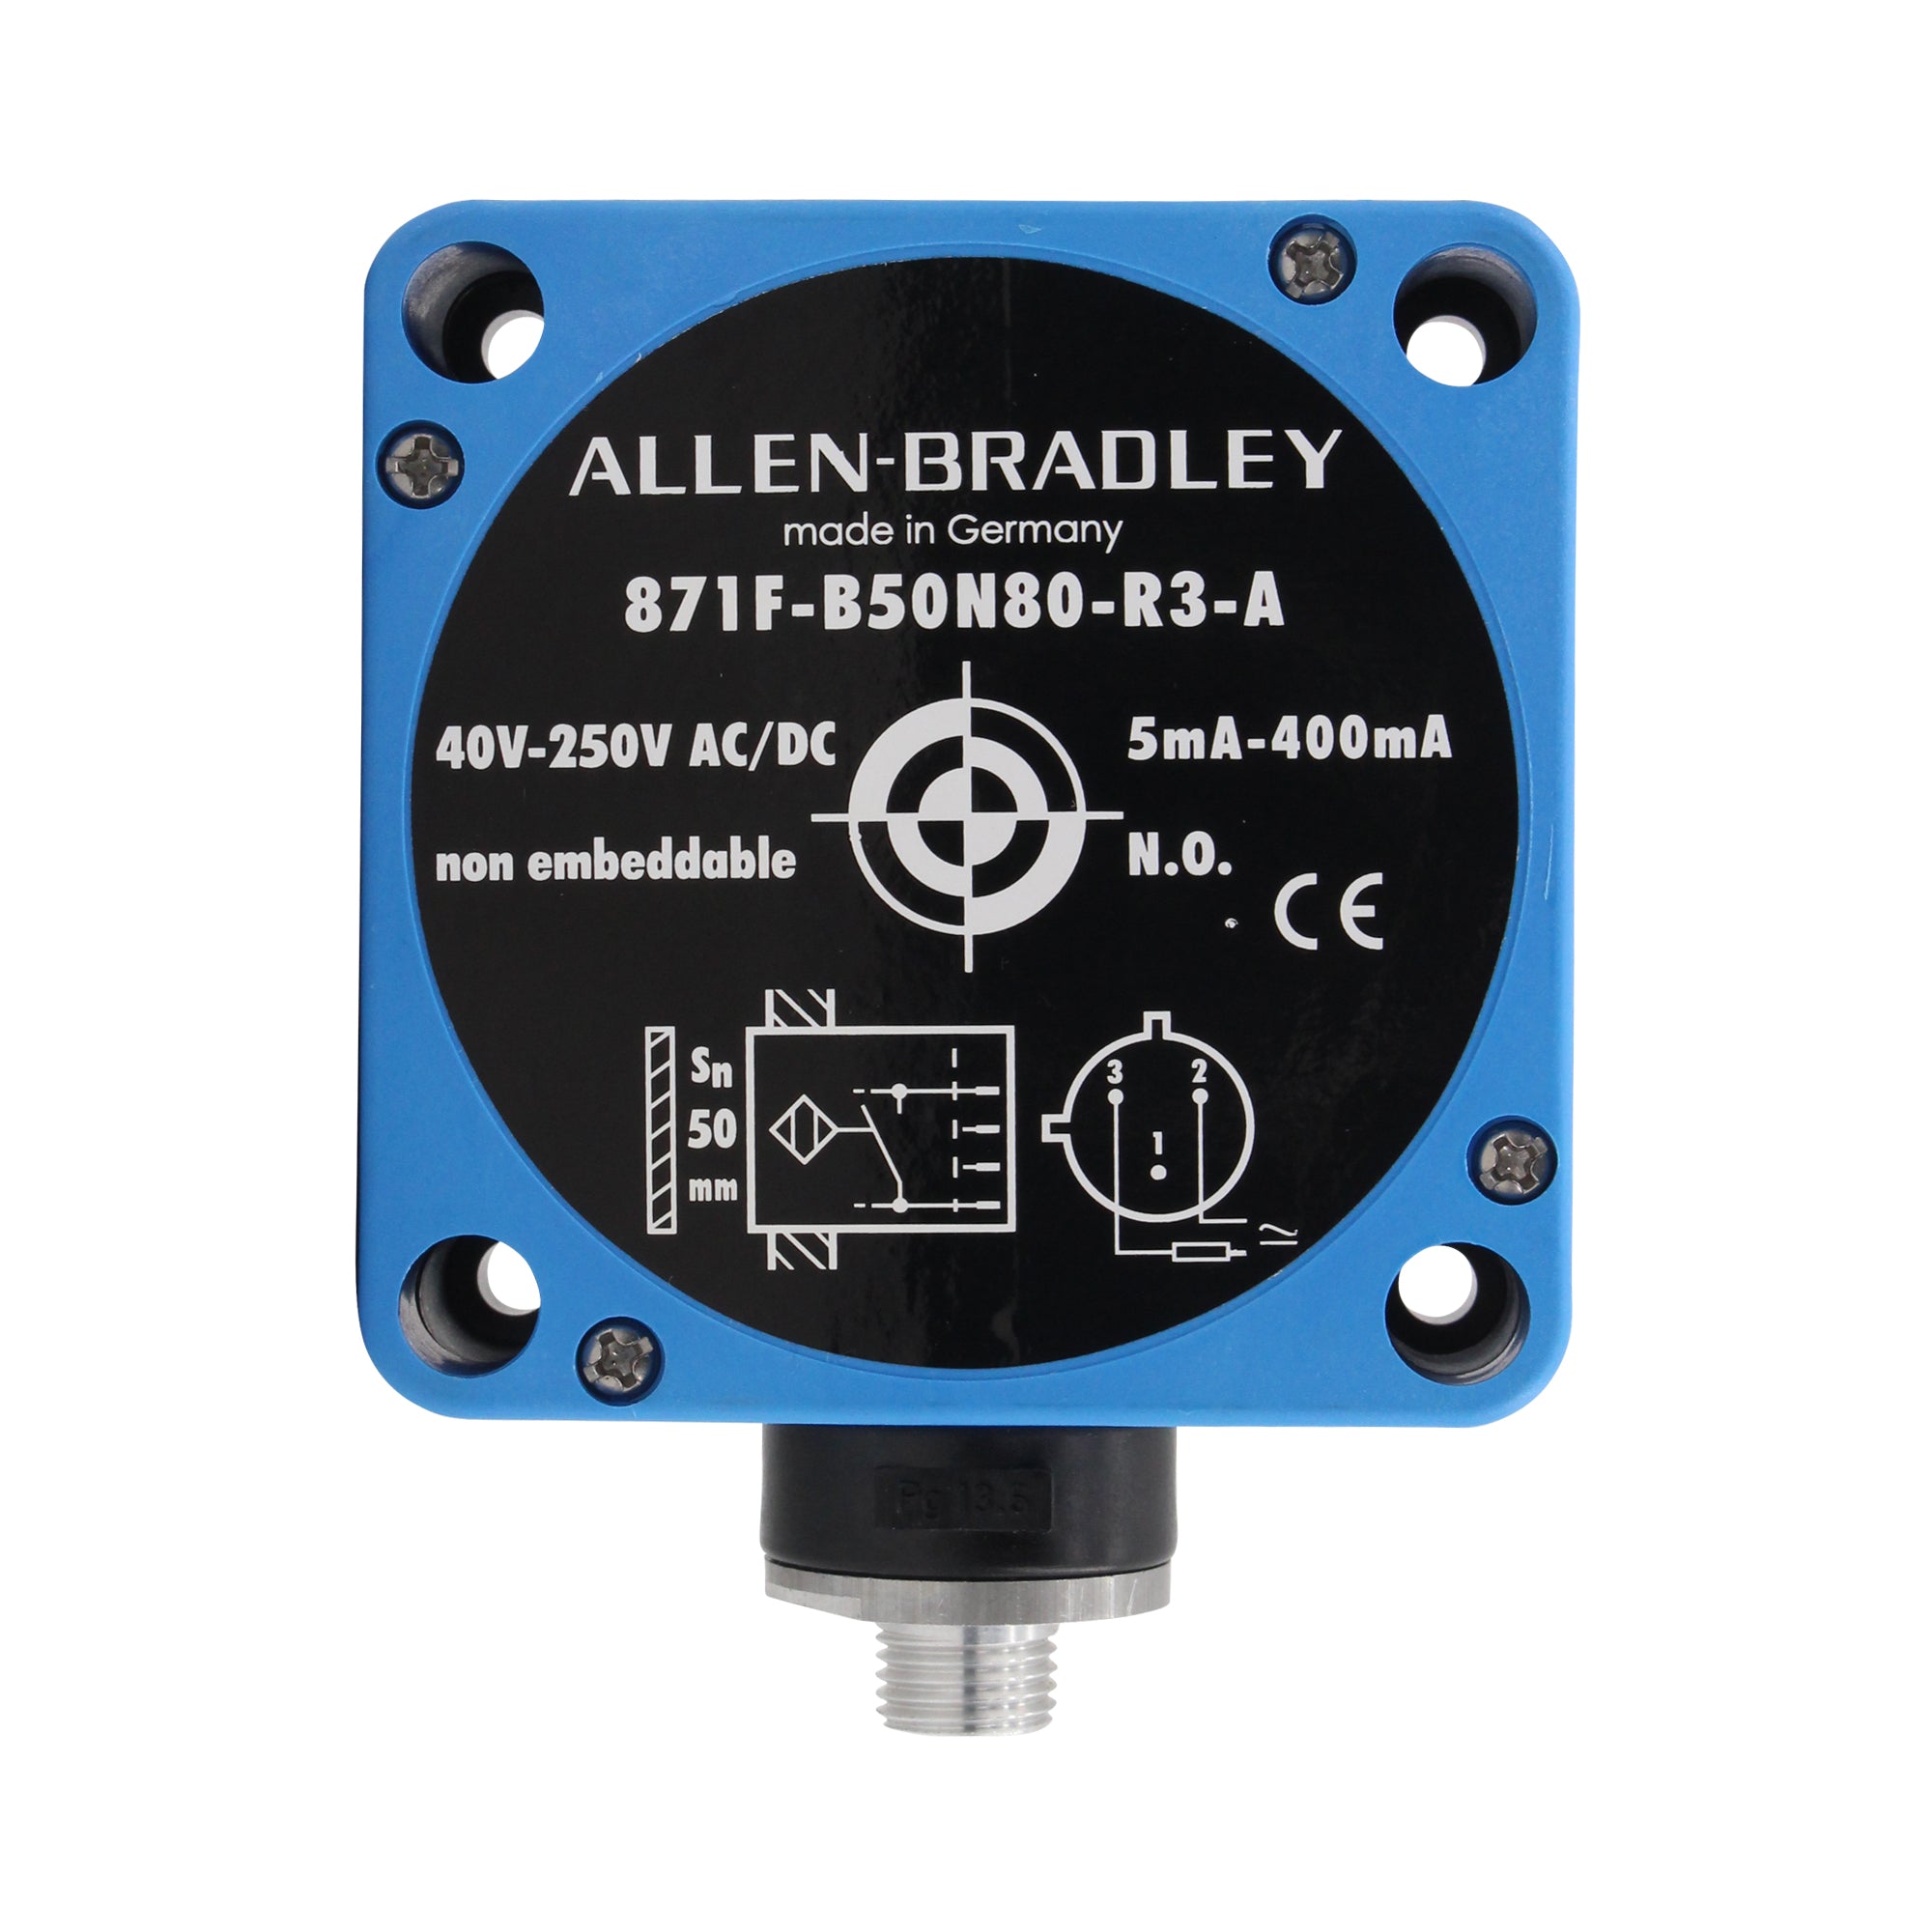 Allen Bradley Group, ALLEN BRADLEY 871F-B50N80-R3 PROXIMITY SWITCH, SERIES-A, 40V-250V